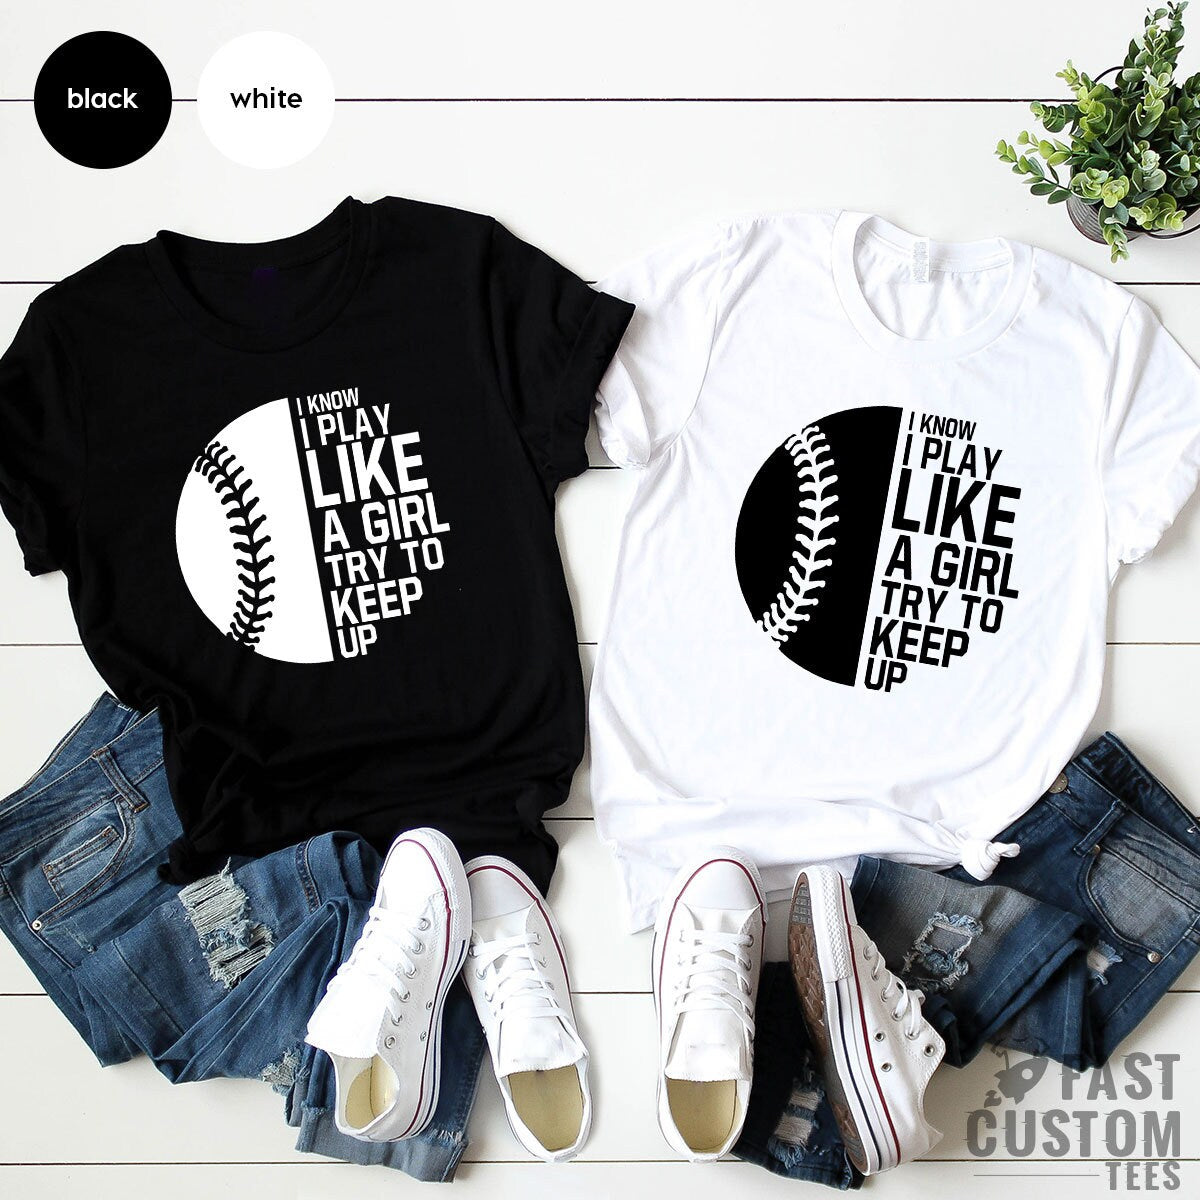 Funny Baseball T-shirts